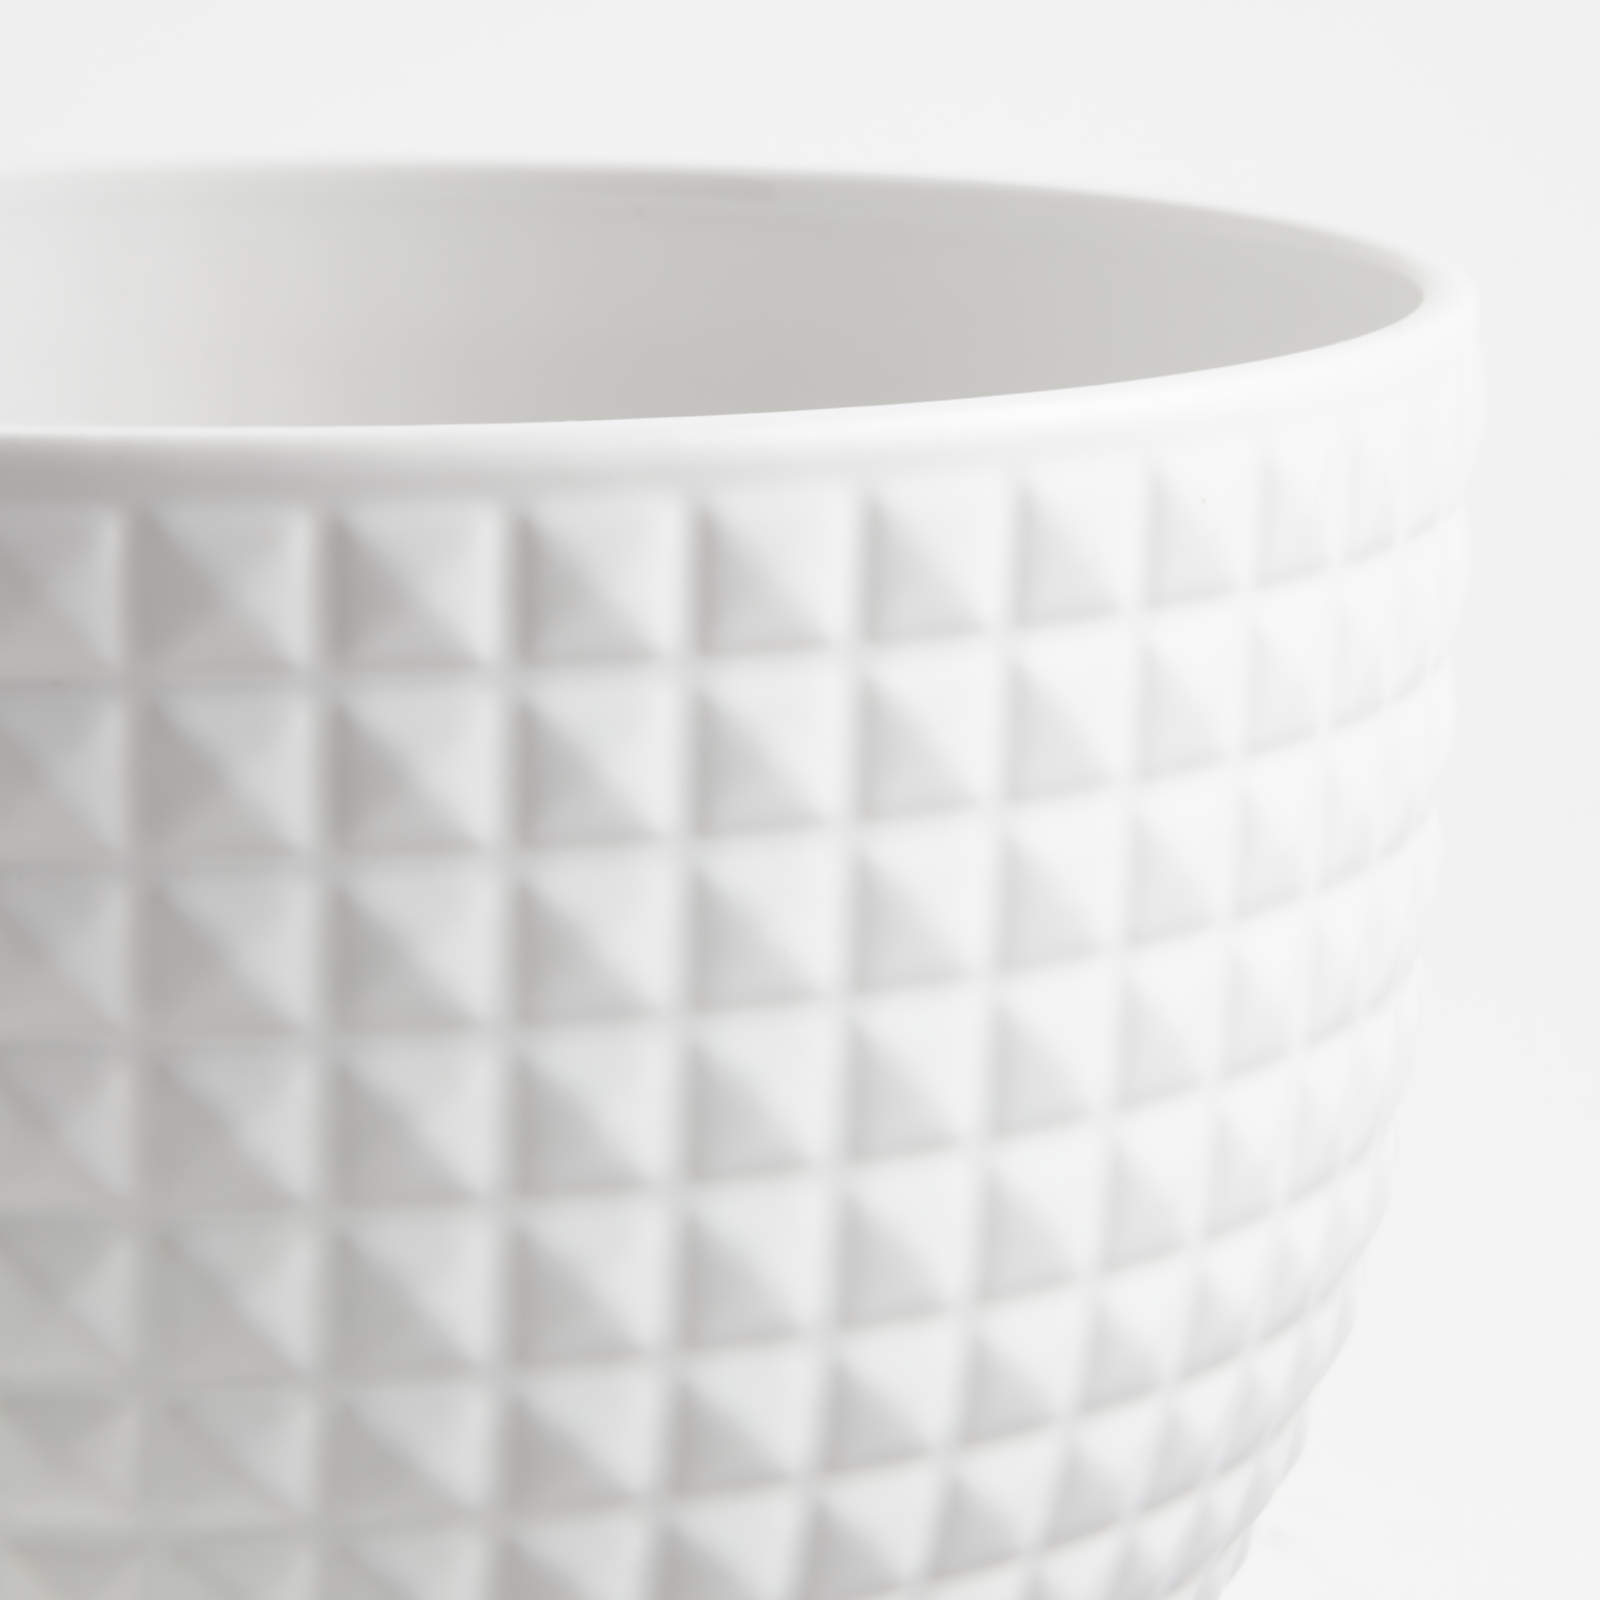 KitchenAid Stand Mixer Matte White Studded 5-Quart Ceramic Mixing Bowl +  Reviews, Crate & Barrel